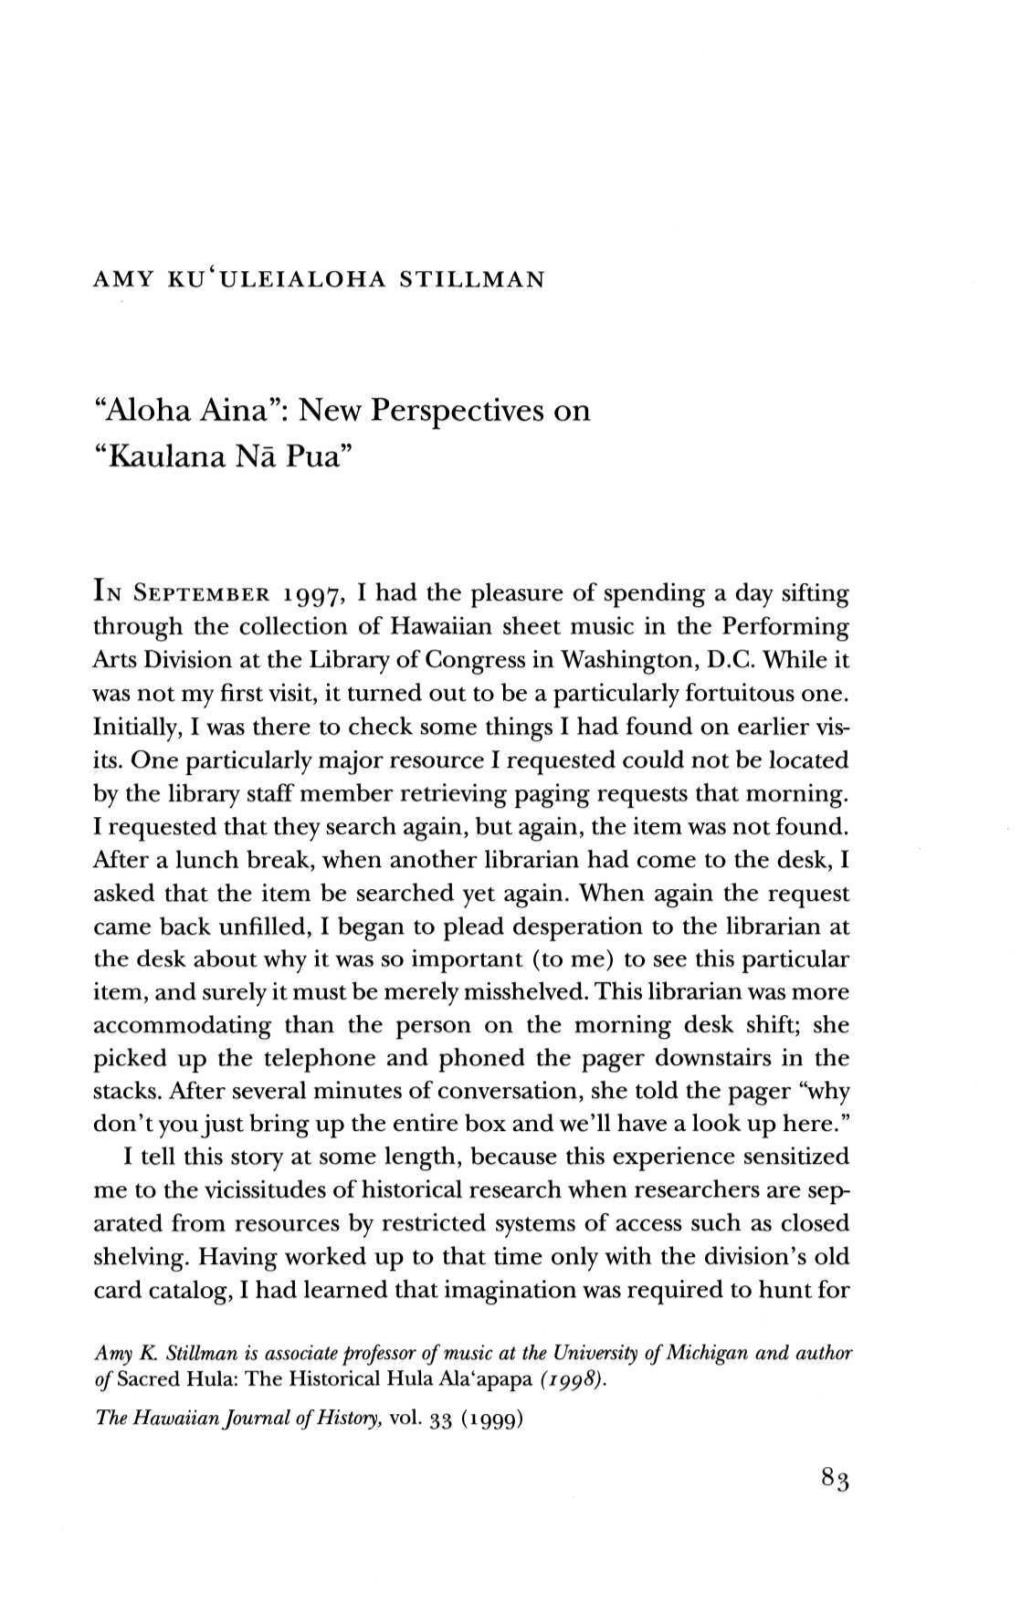 "Aloha Aina": New Perspectives on "Kaulana Na Pua"